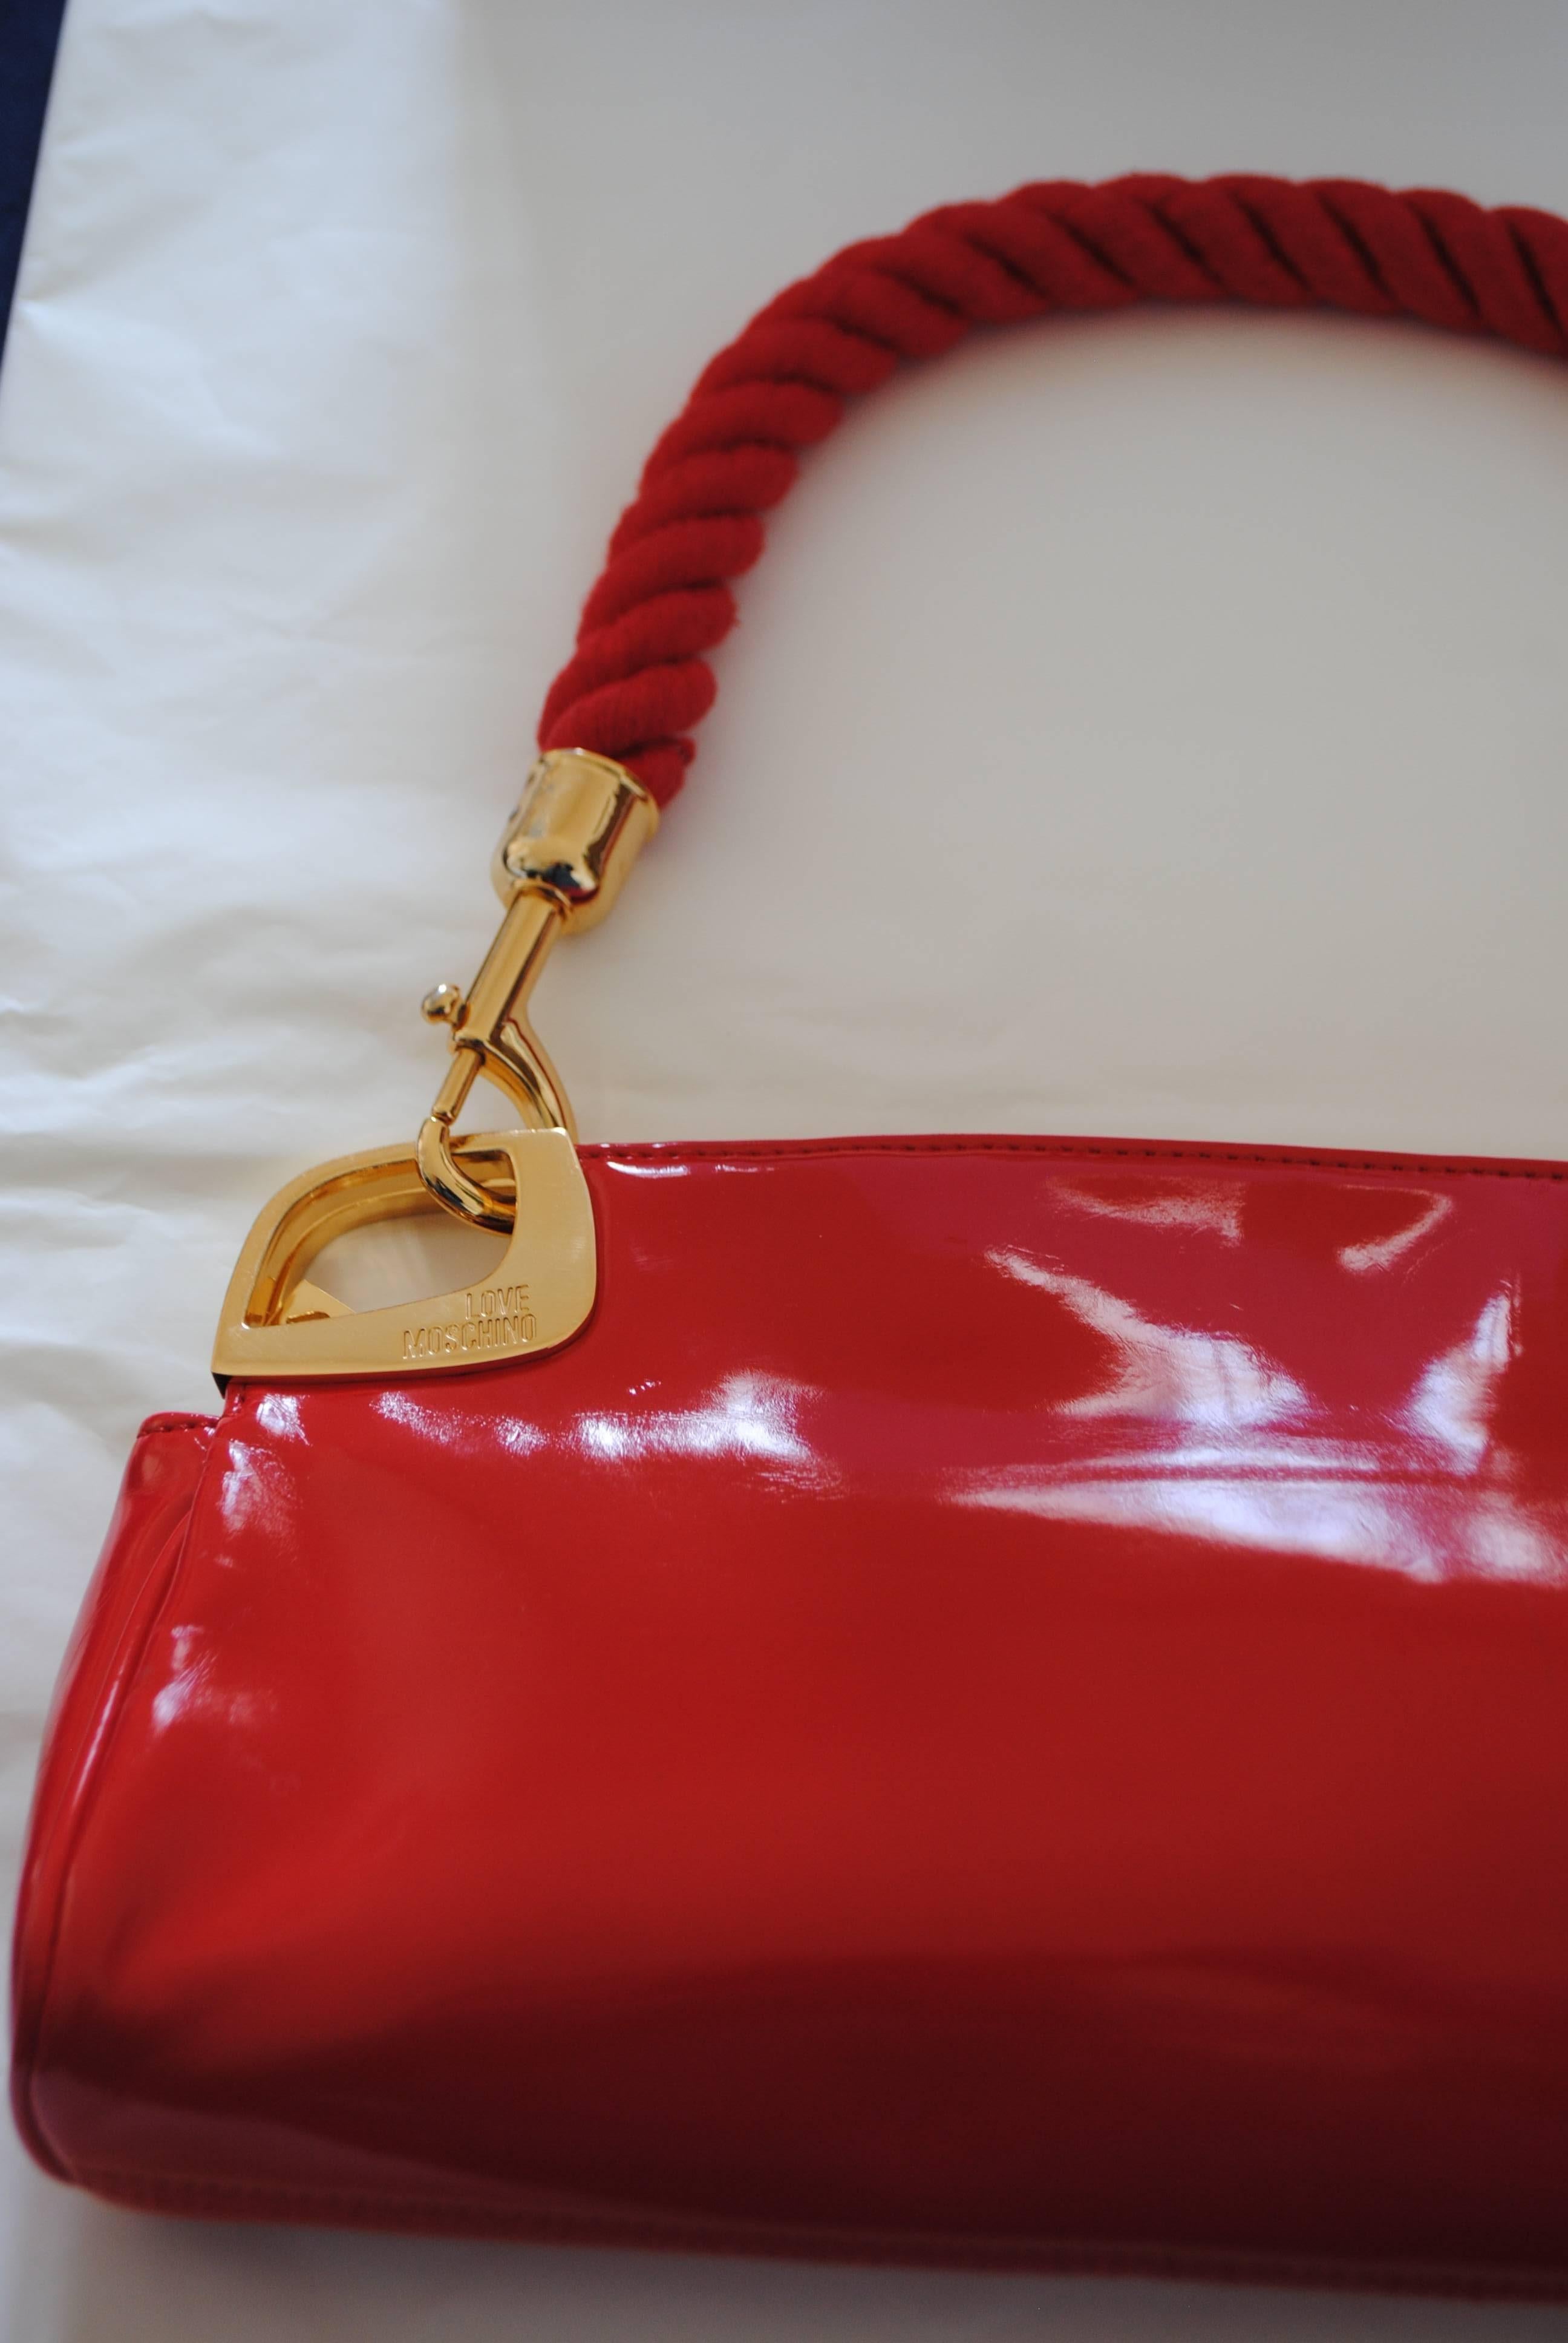 Love Moschino Red Carpet Varnish Red Leather Shoulder Bag
Gold tone Hardware
Removable Shoulder Chain 
Shoulder total chain lenght 38 cm